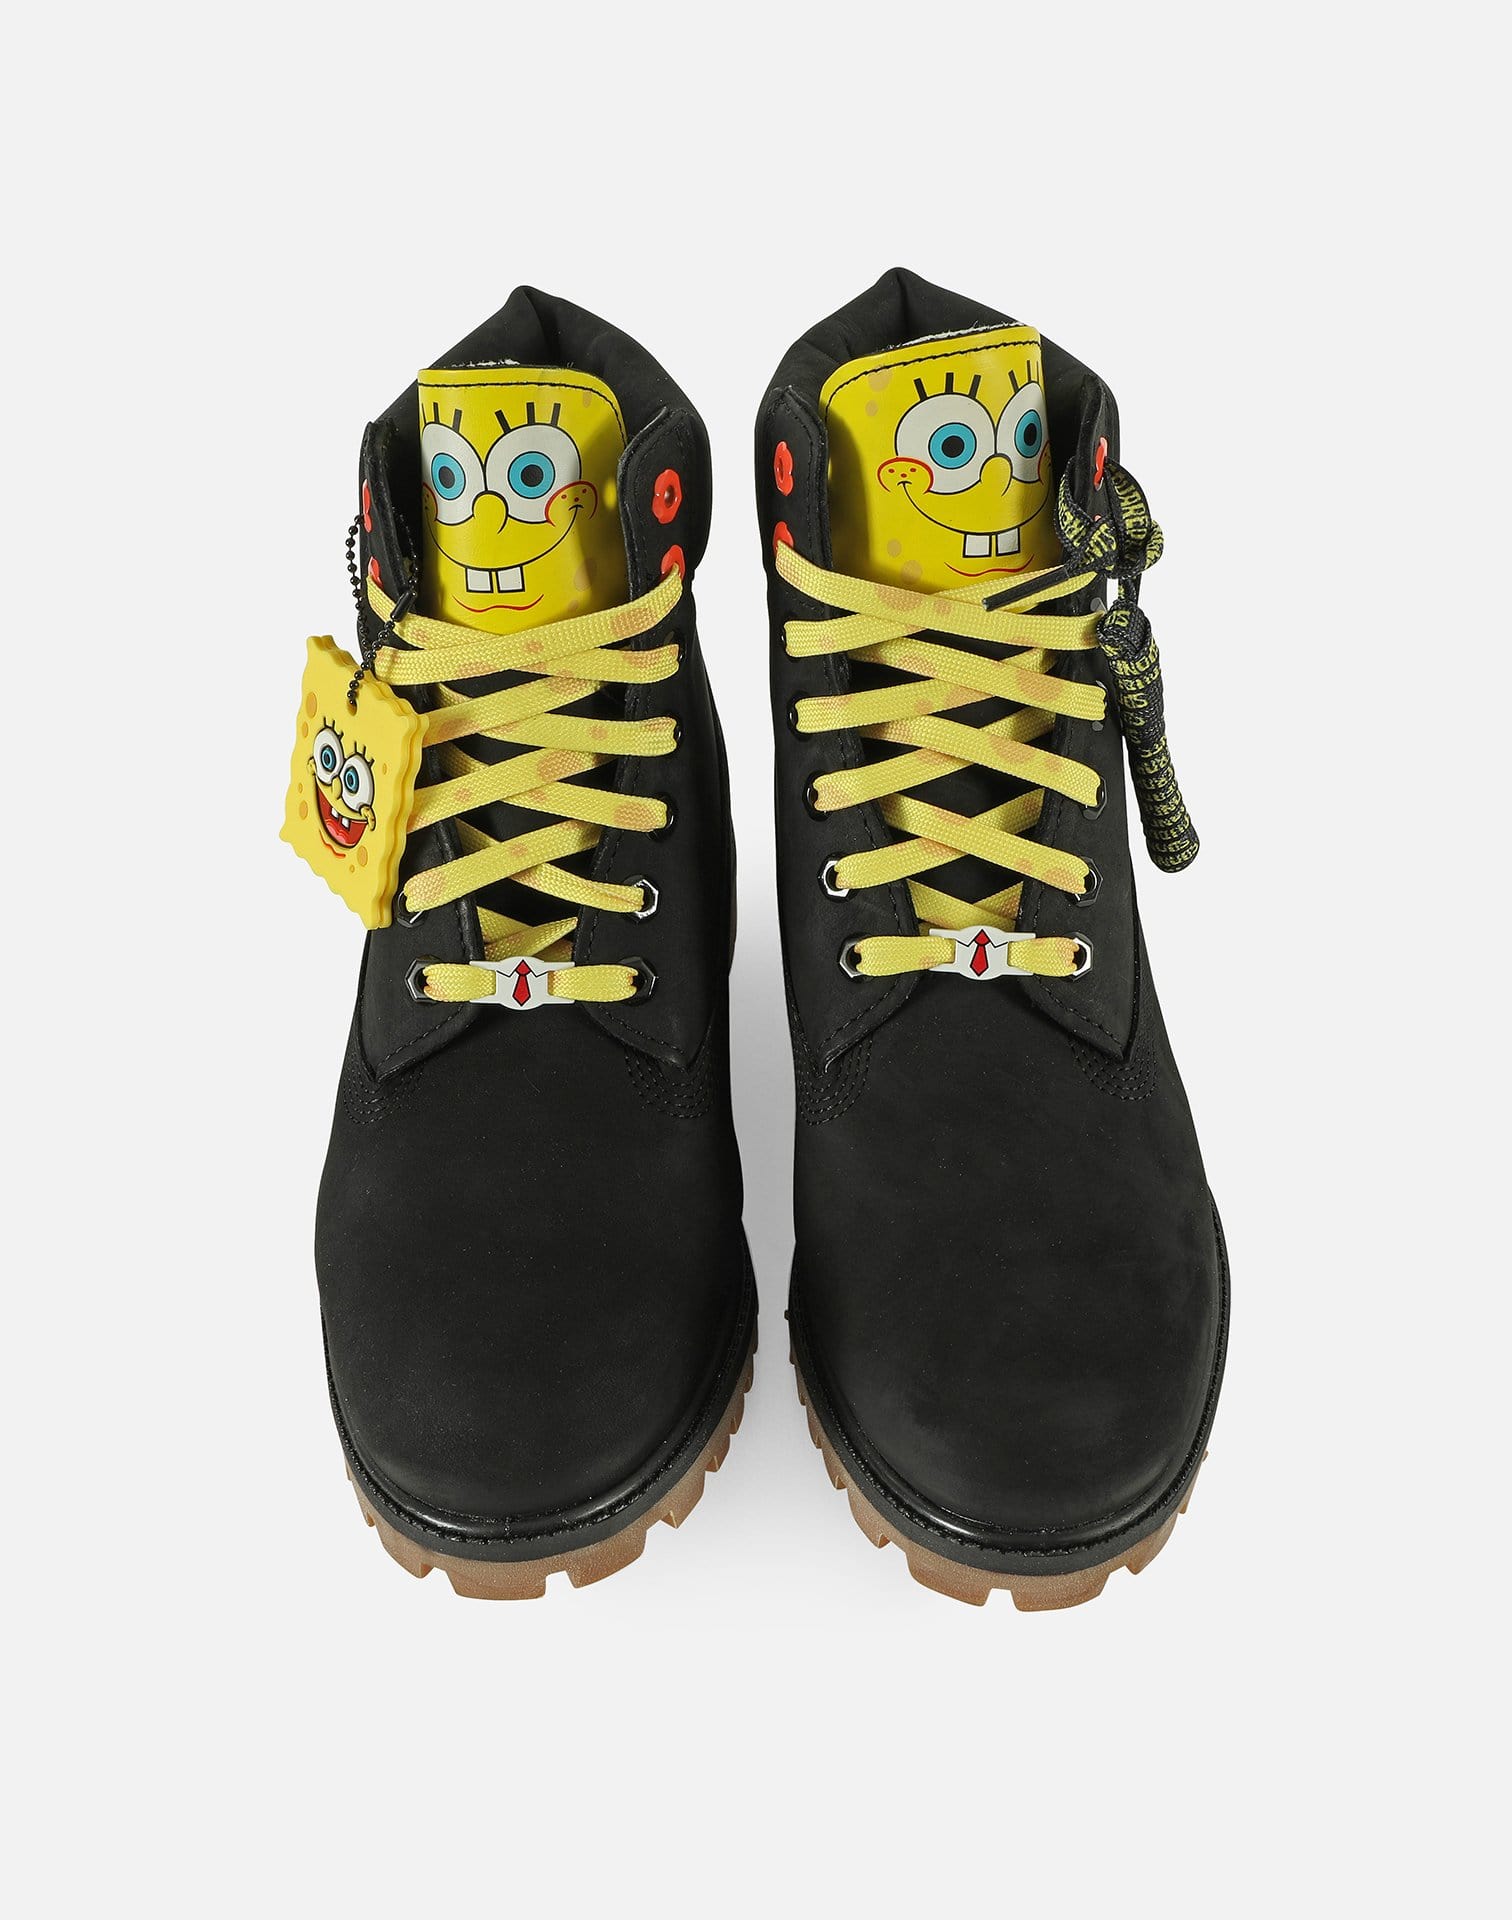 Timberland x Spongebob Squarepants Men's 6" Premium Boots